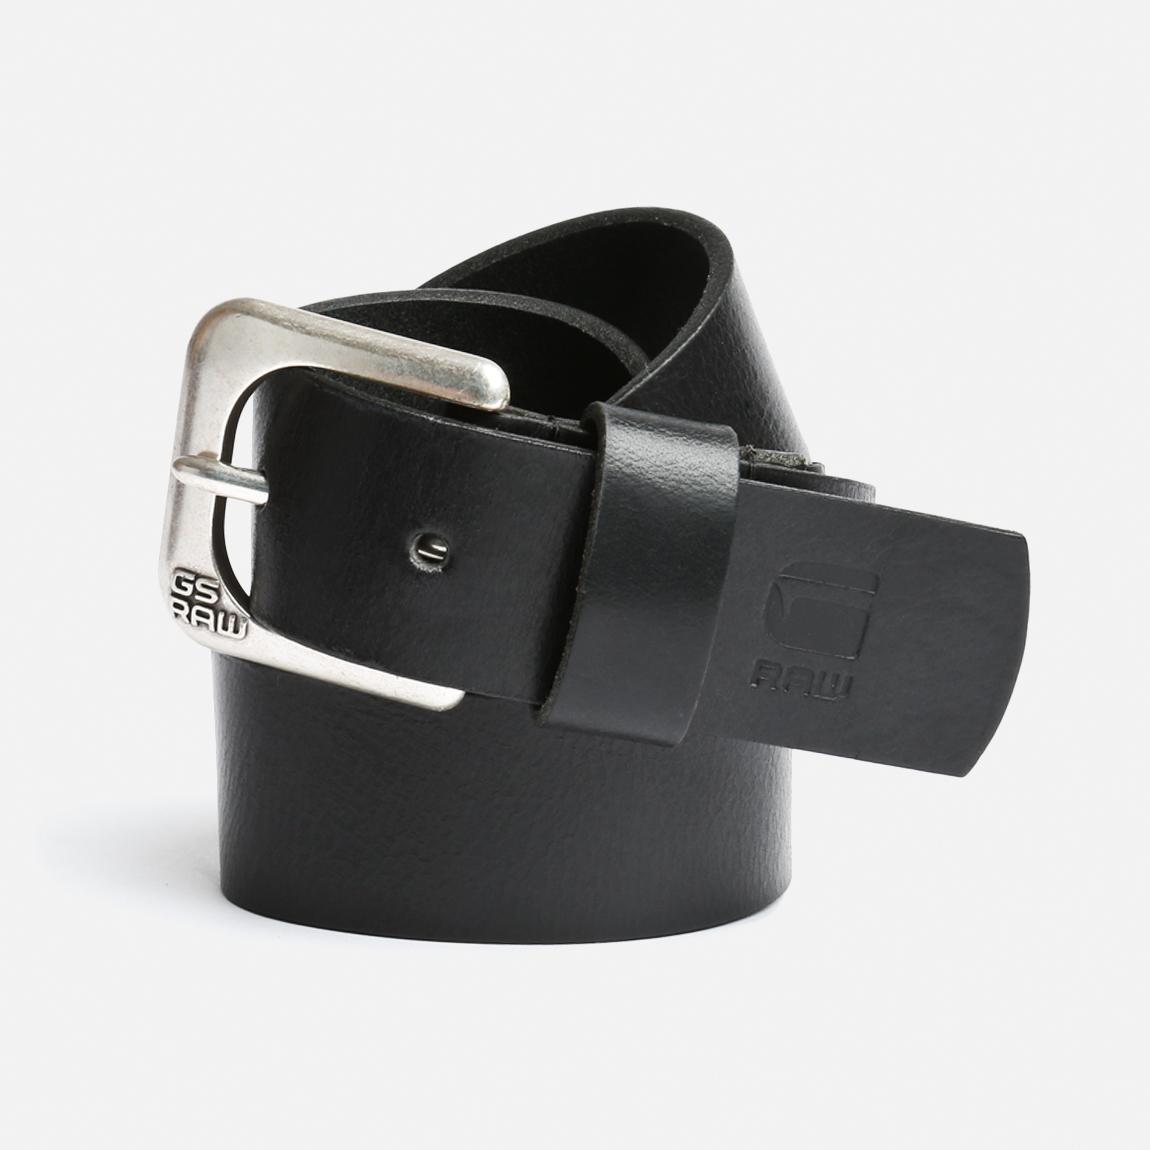 Zed Belt - Black G-Star RAW Belts | www.bagssaleusa.com/product-category/speedy-bag/